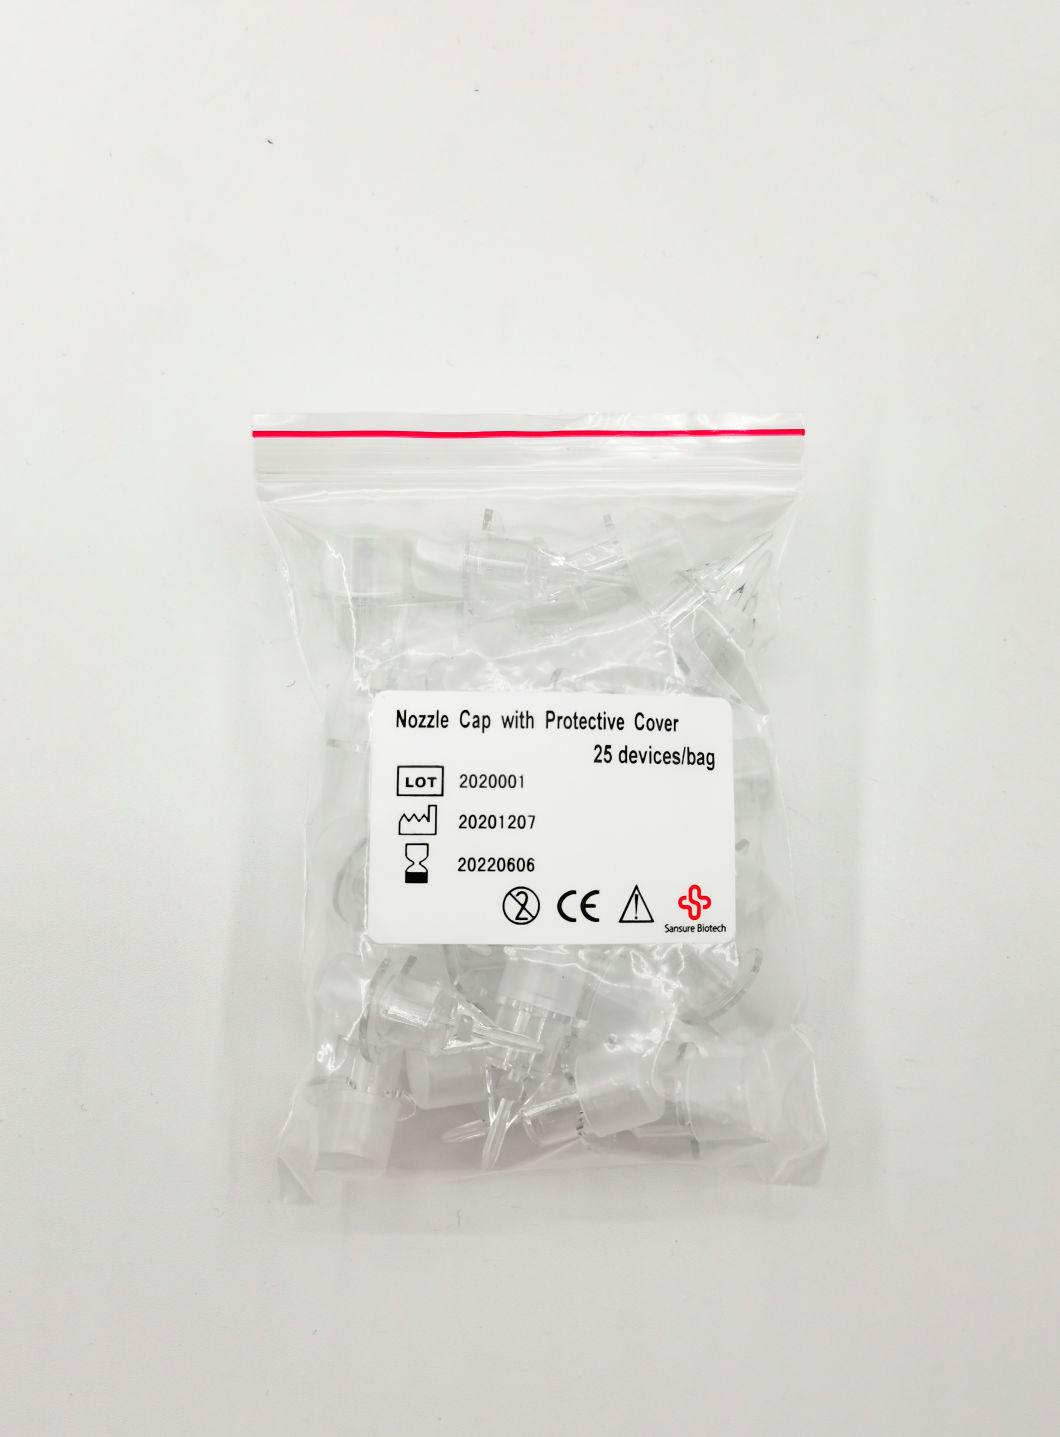 Dengue Ns1 Antigen Rapid Test Lab Kits Cleared CE Mark